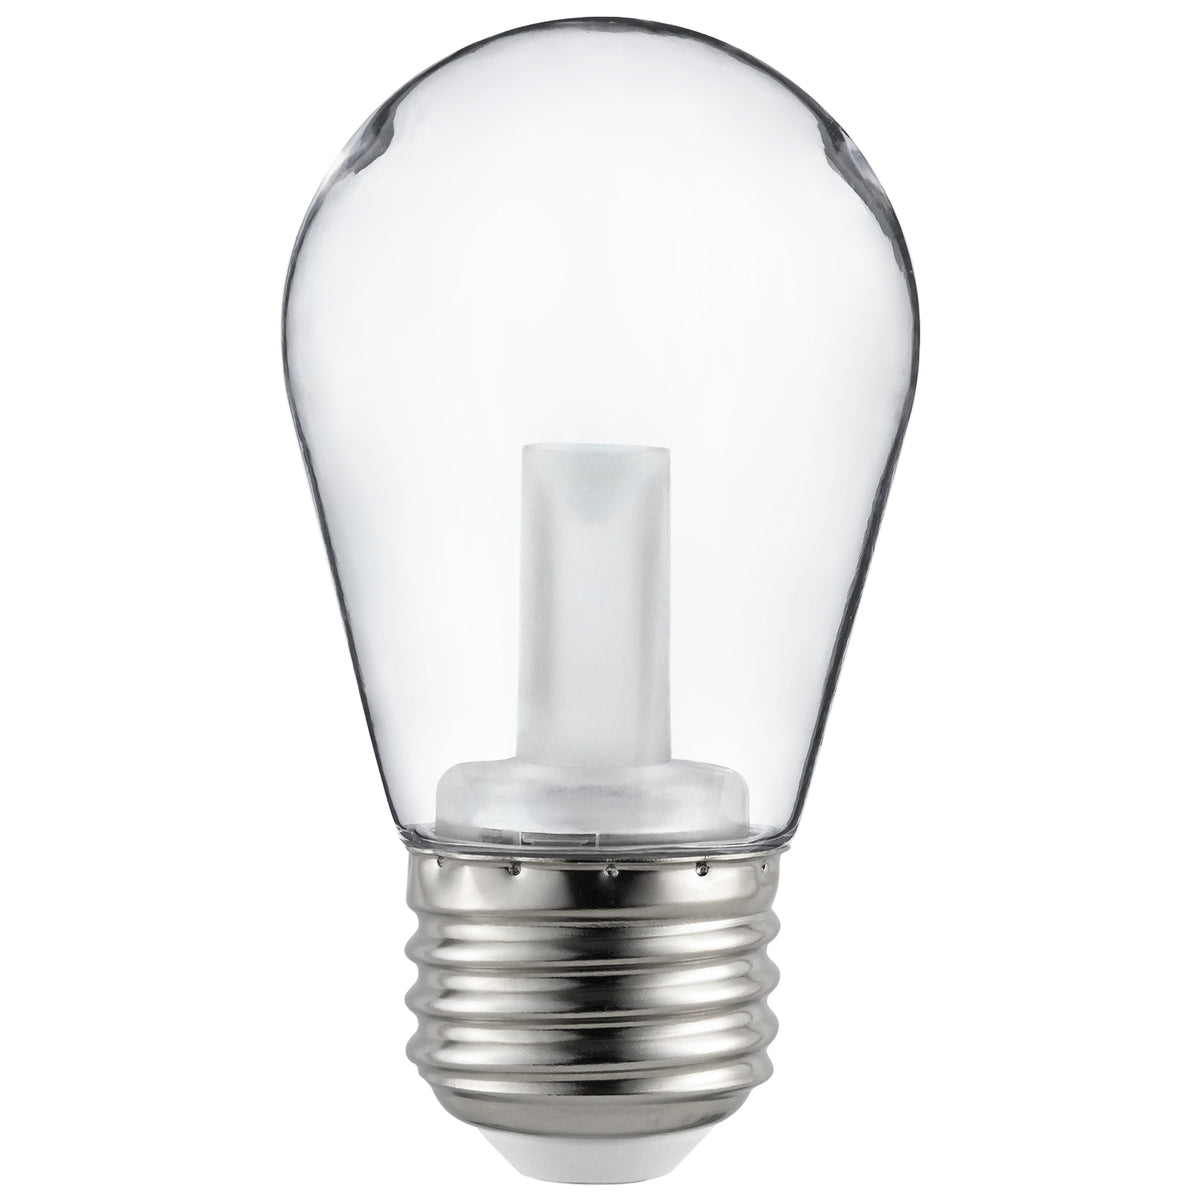 Sunlite 81068-SU 1 Watt S11 Lamp Medium (E26) Base Warm White 2700K